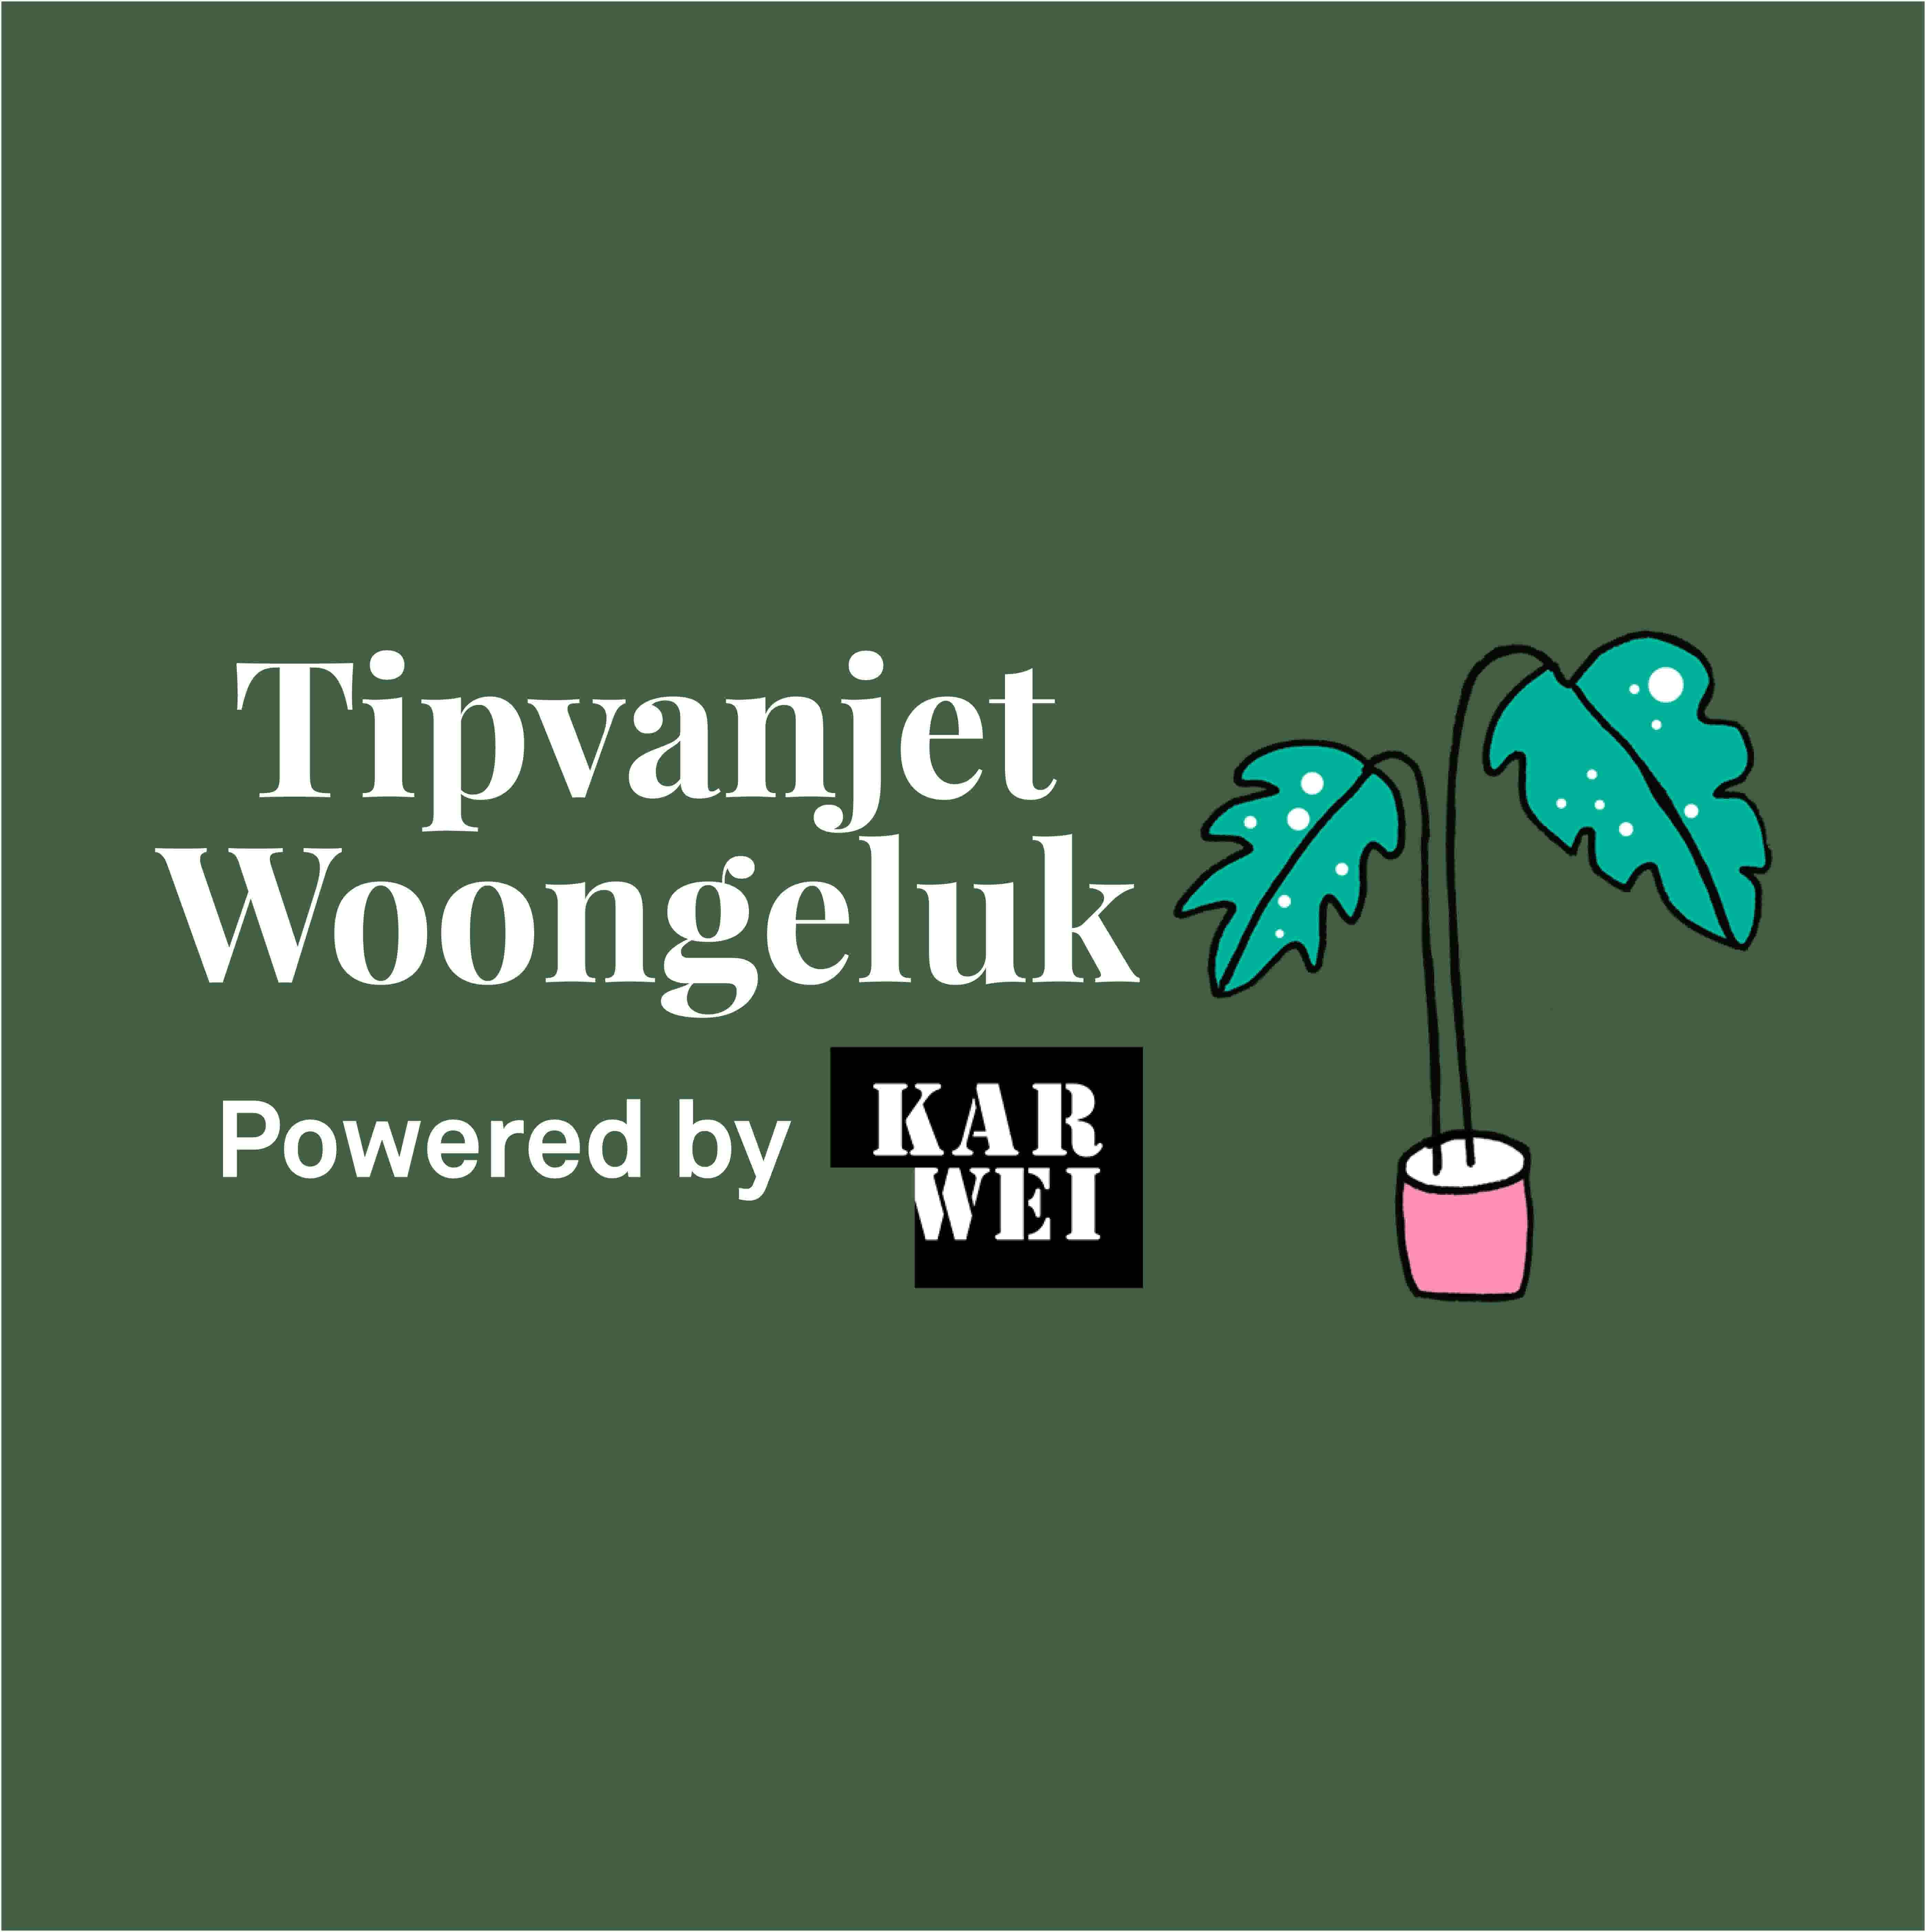 Podcast Tip van Jet Woongeluk Powered by Karwei